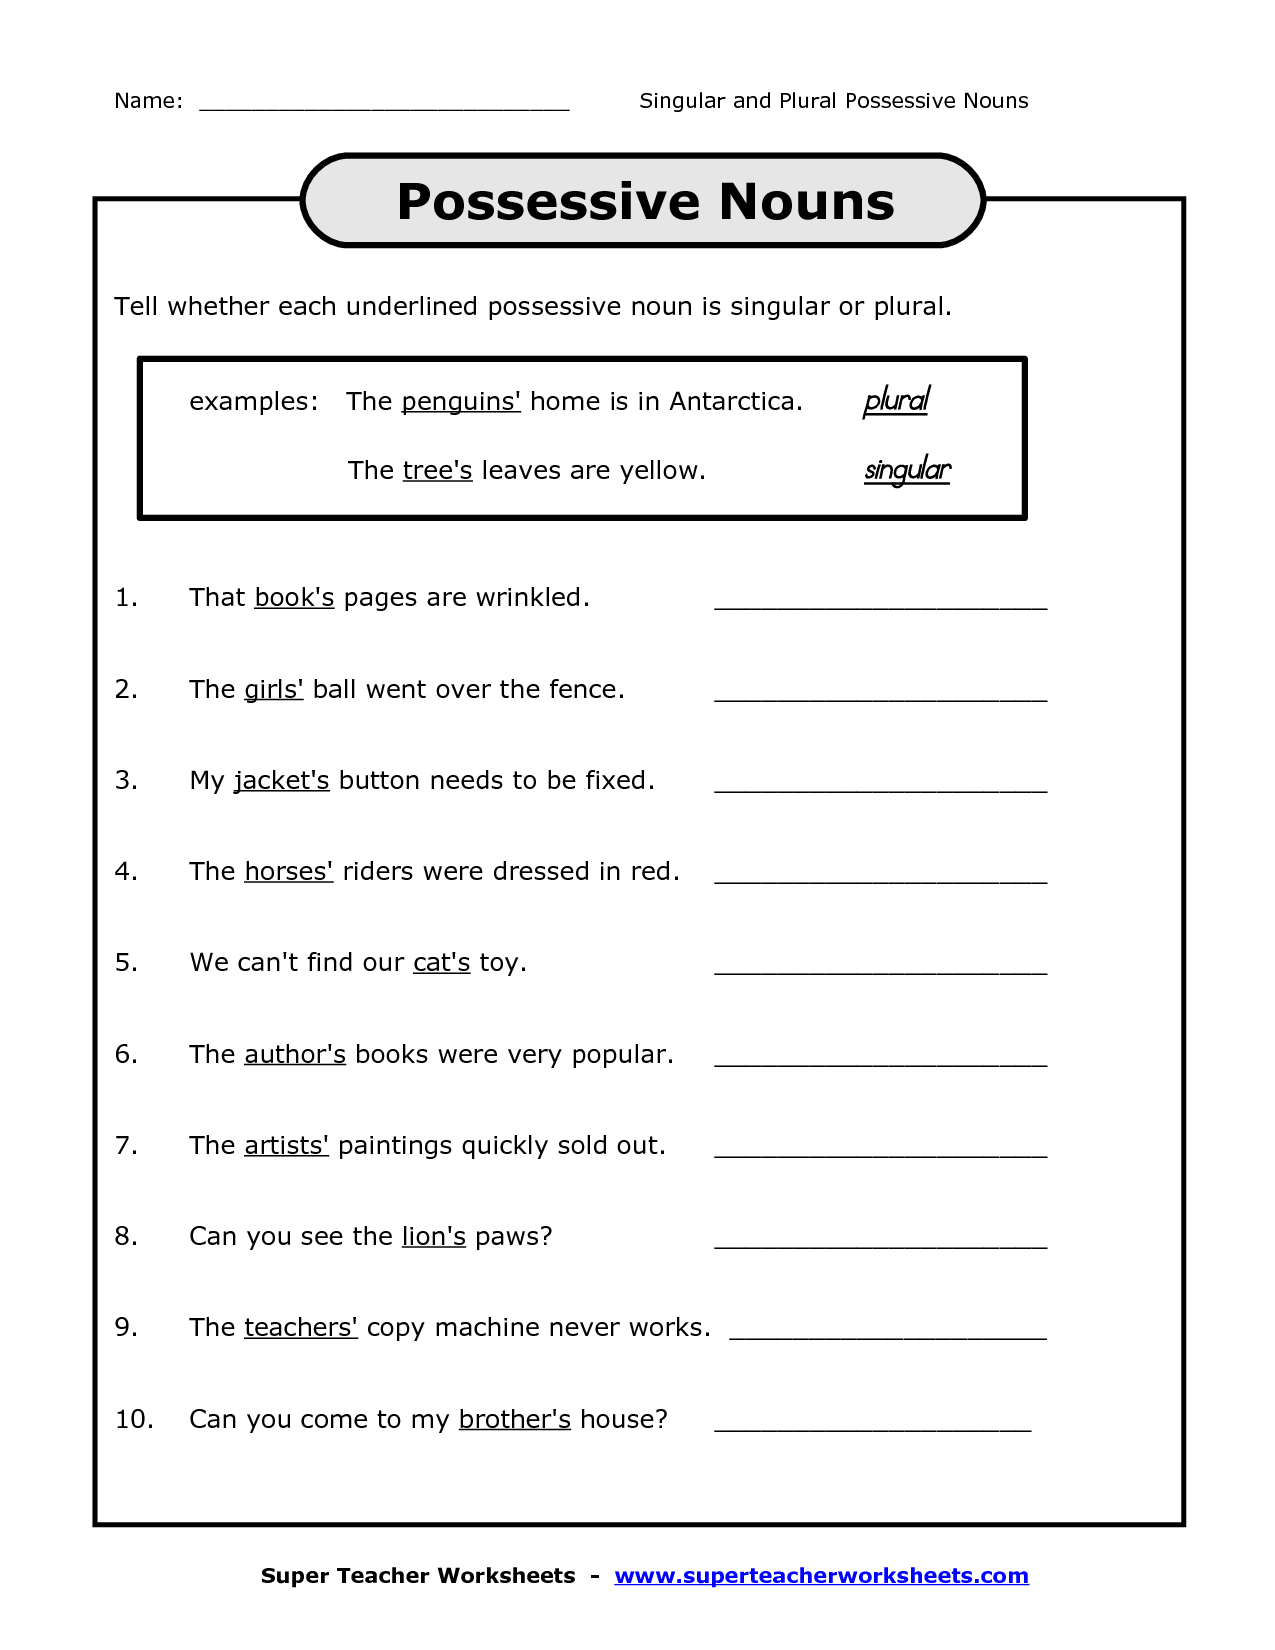 18 Best Images Of On Singular And Plural Worksheet For Grade 1 Singular And Plural Nouns